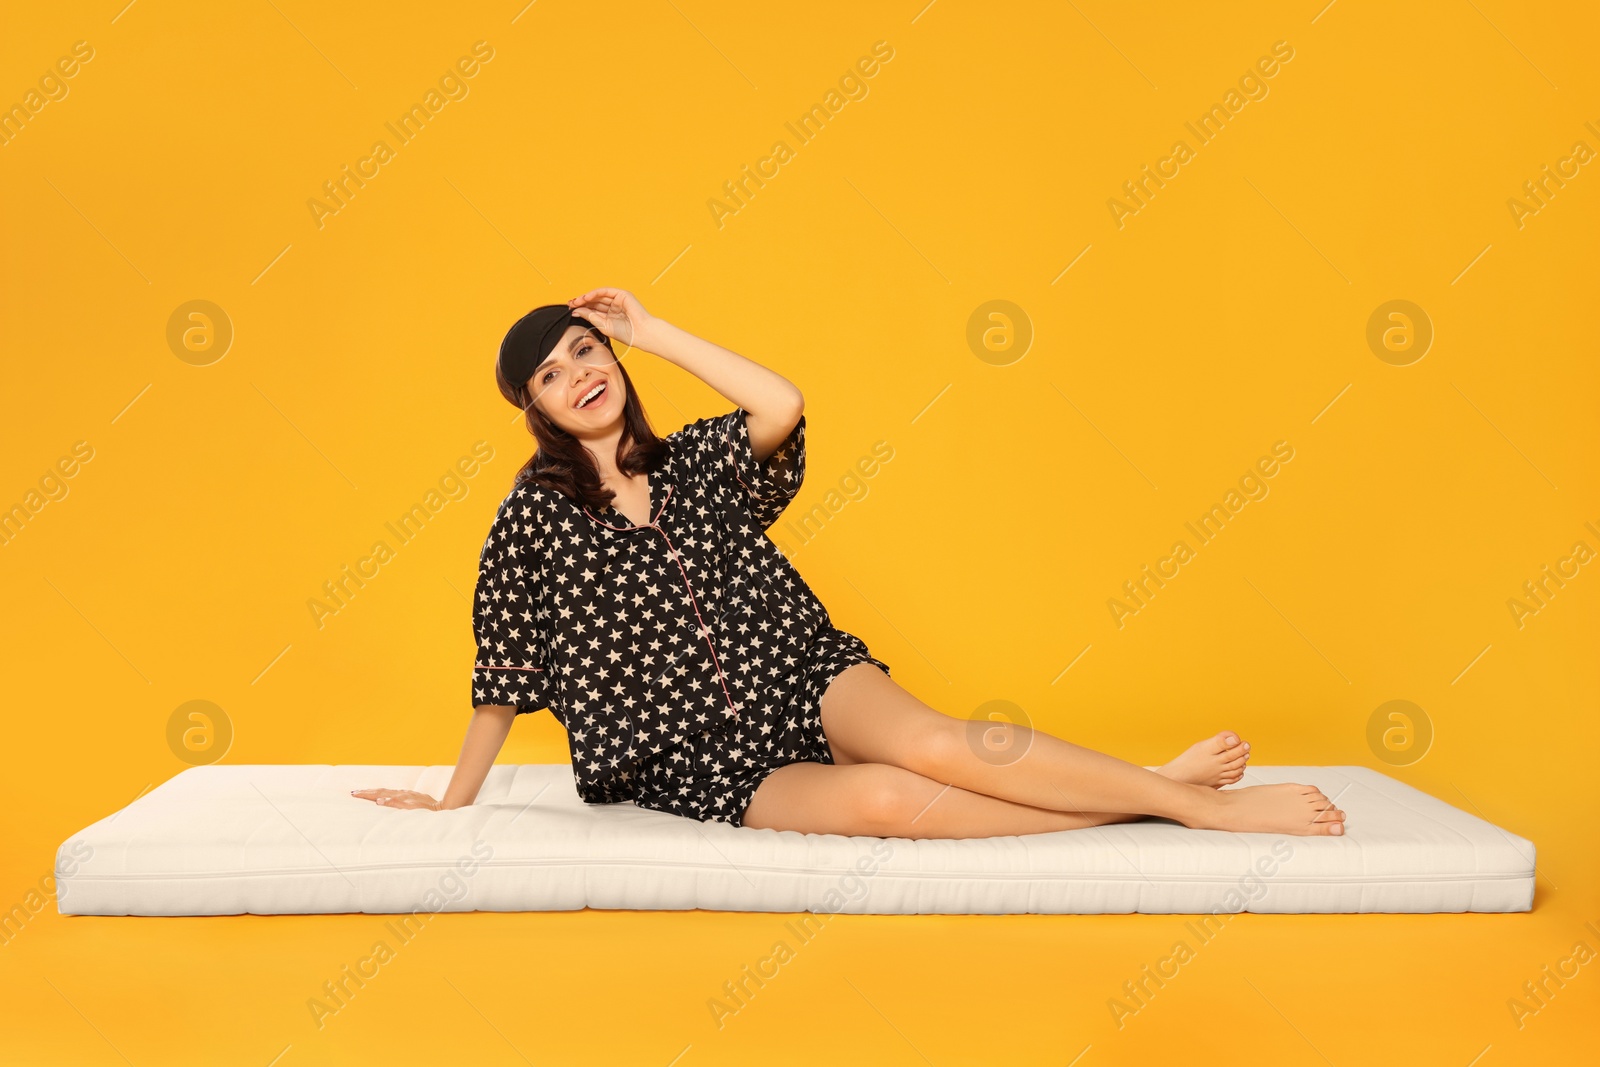 Photo of Woman in sleep mask sitting on soft mattress against orange background